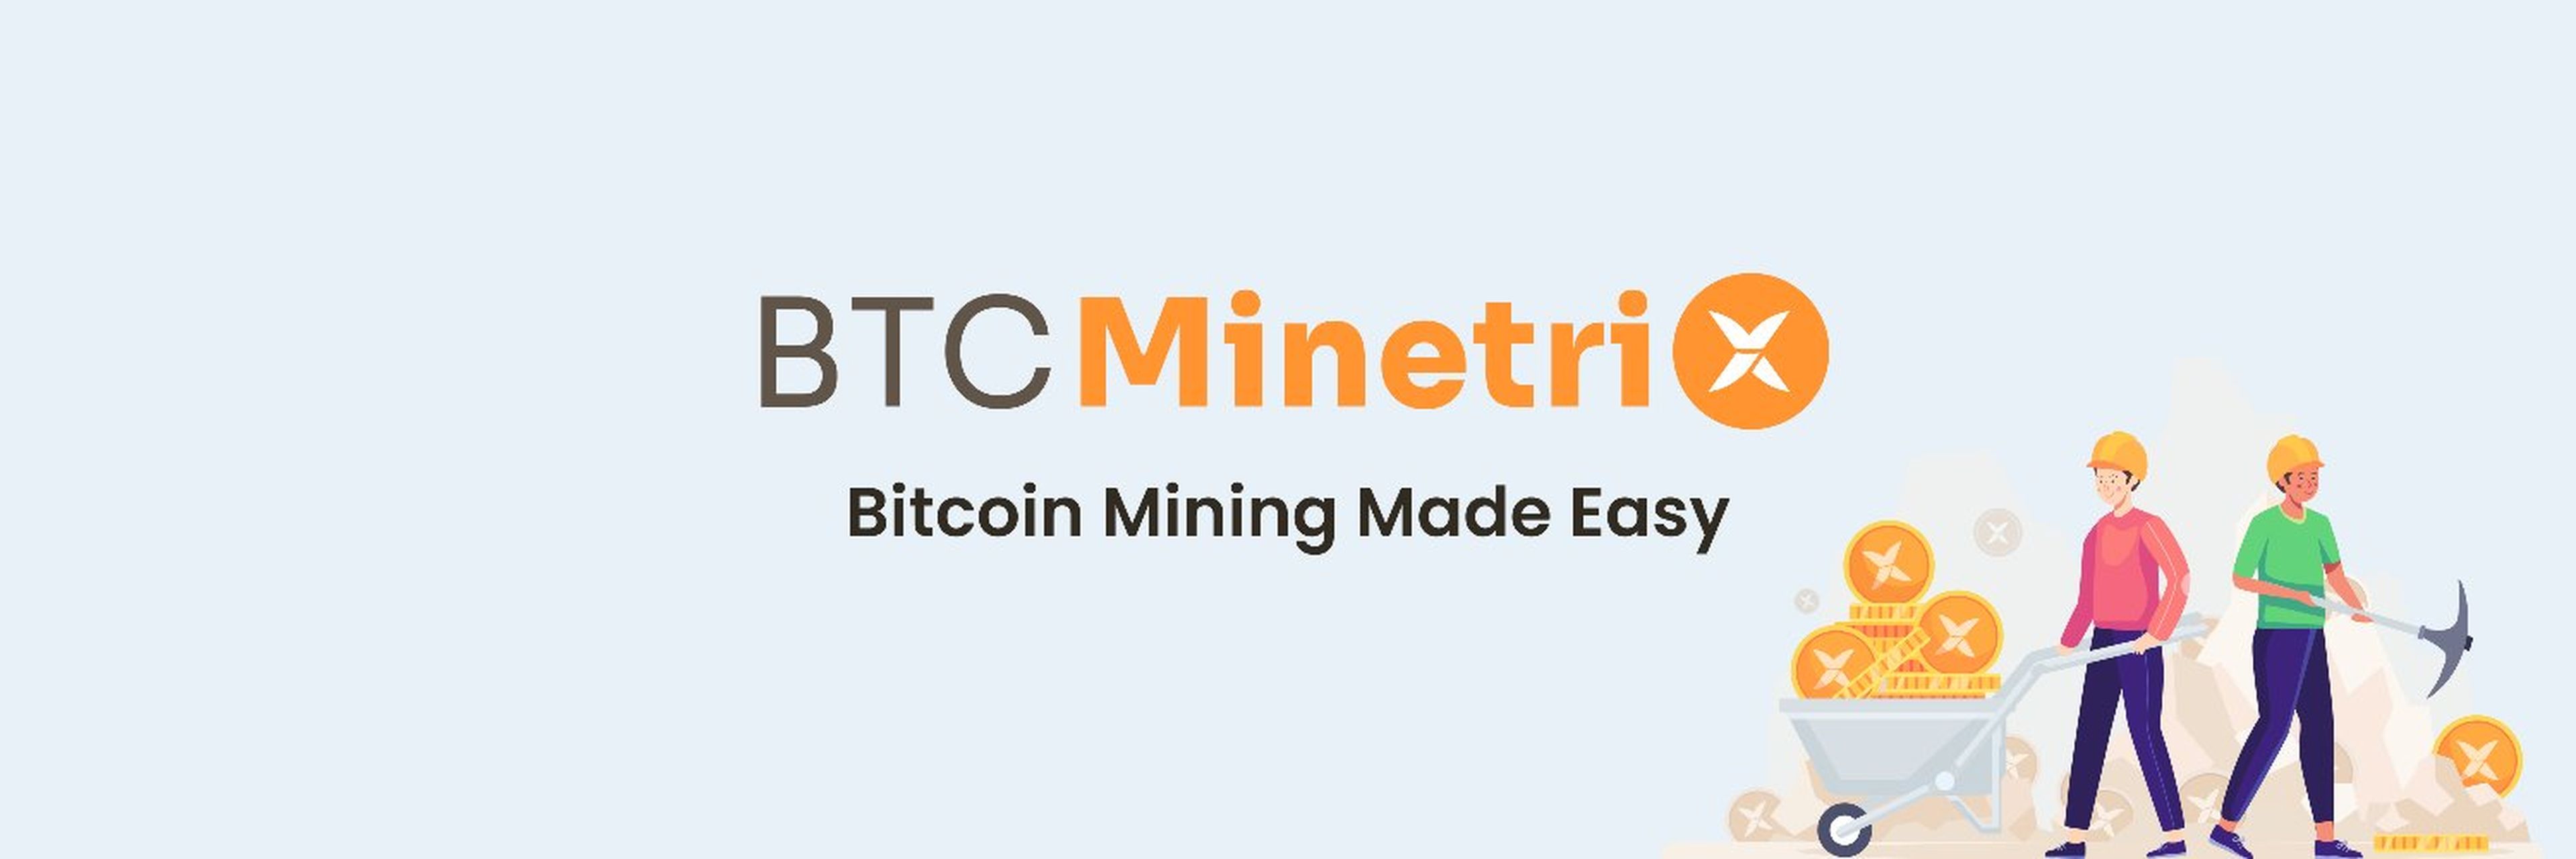 Logo de Bitcoin Minetrix.